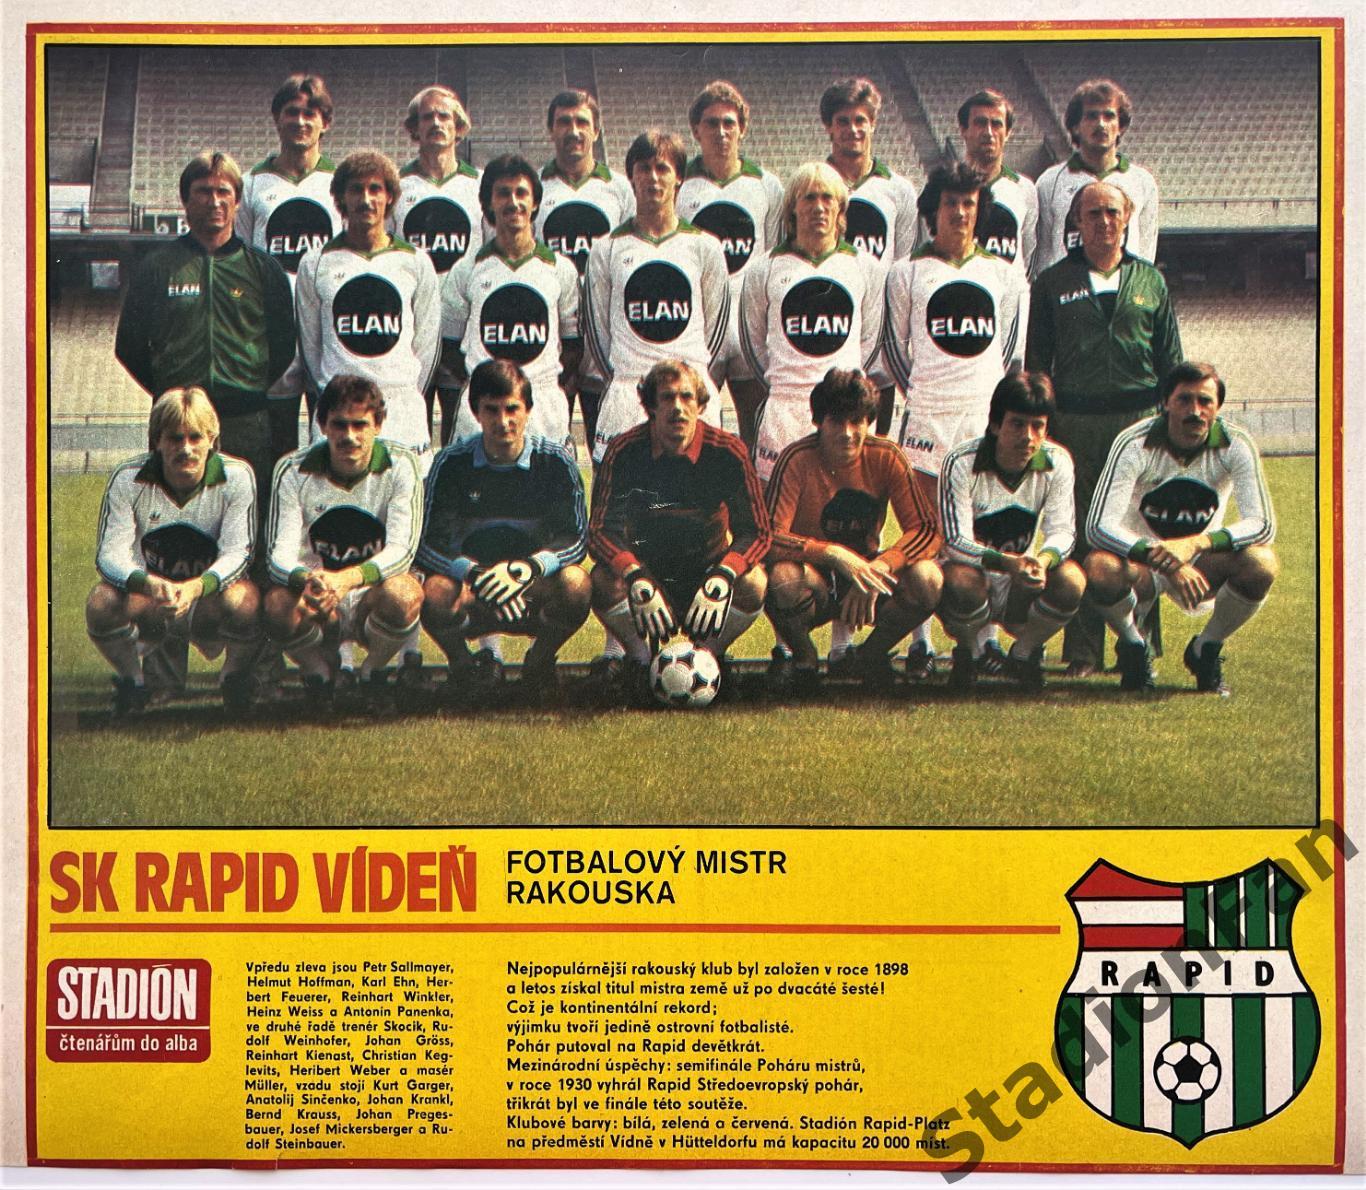 Постер из журнала Стадион (Stadion) - Rapid Wien, 1982.